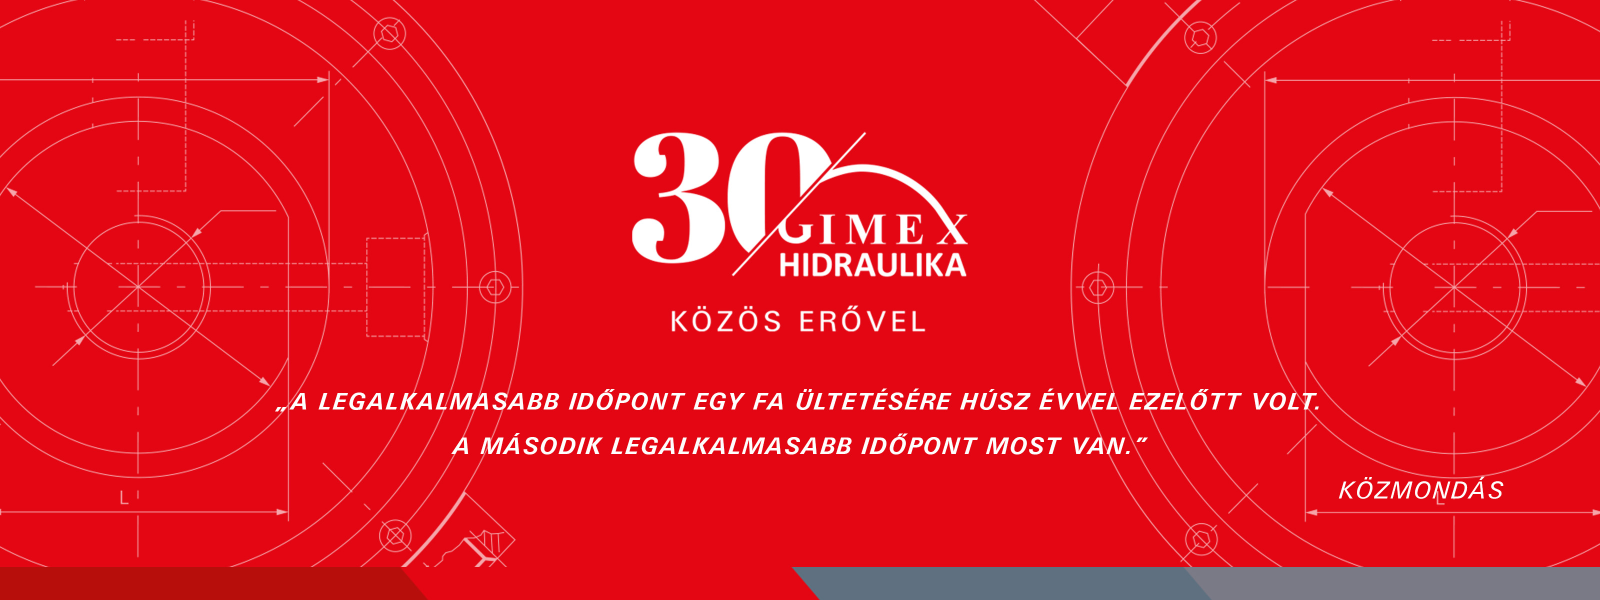 Gimex 30